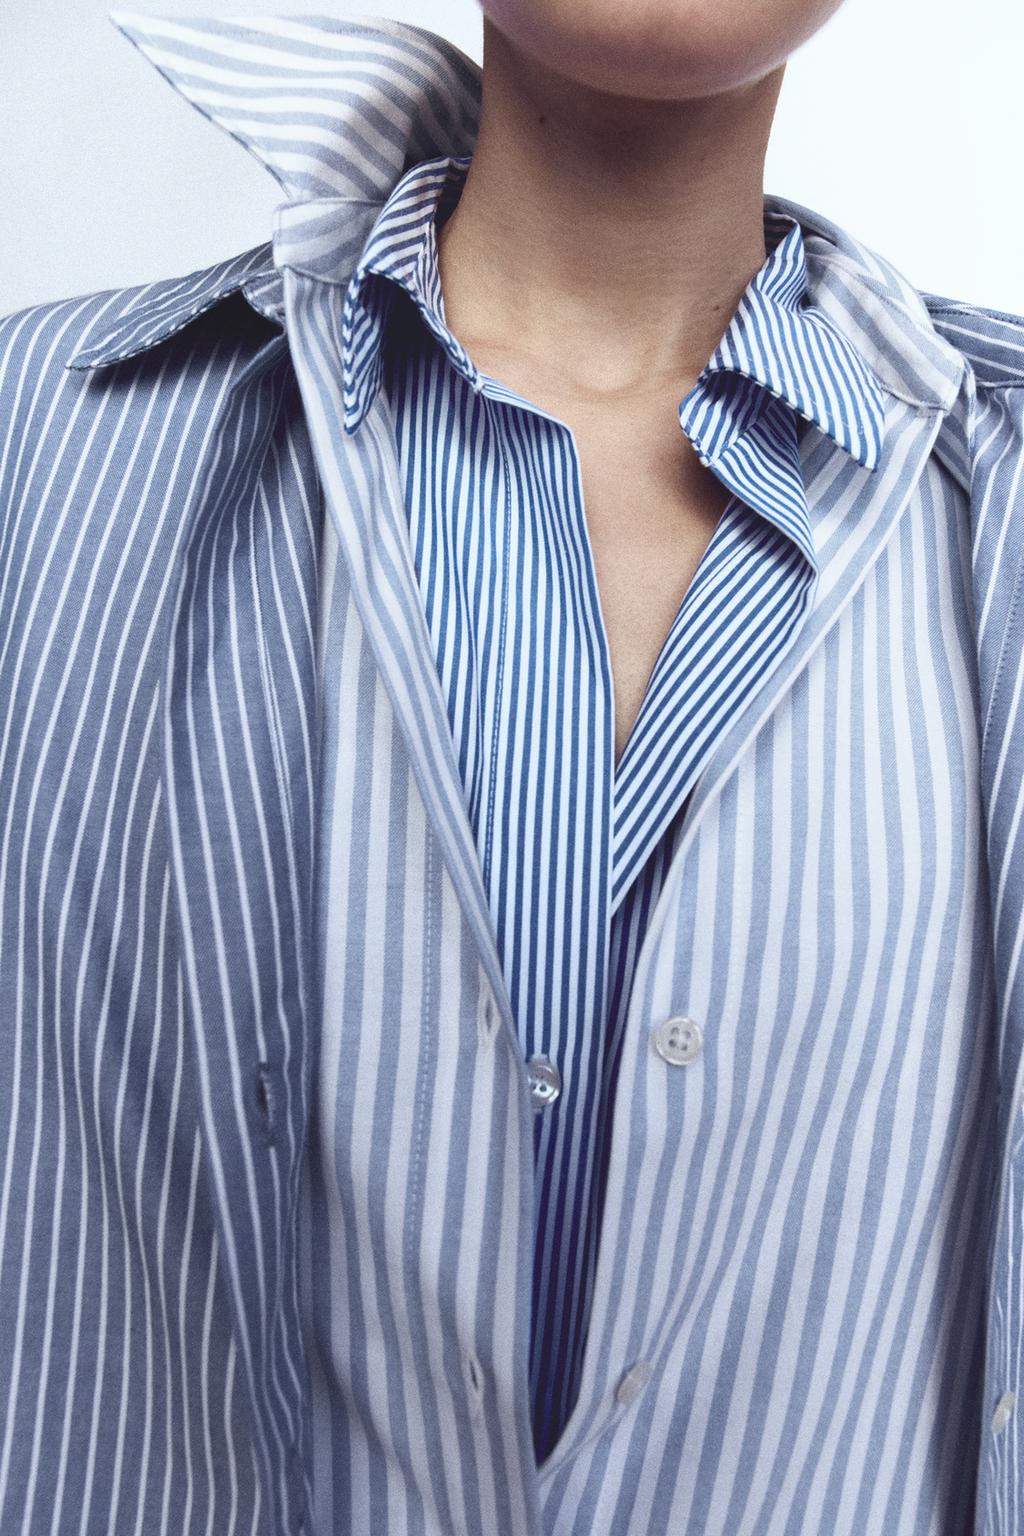 Рубашка поплин ZARA, белый/темно-синий рубашка zara oversized синий белый